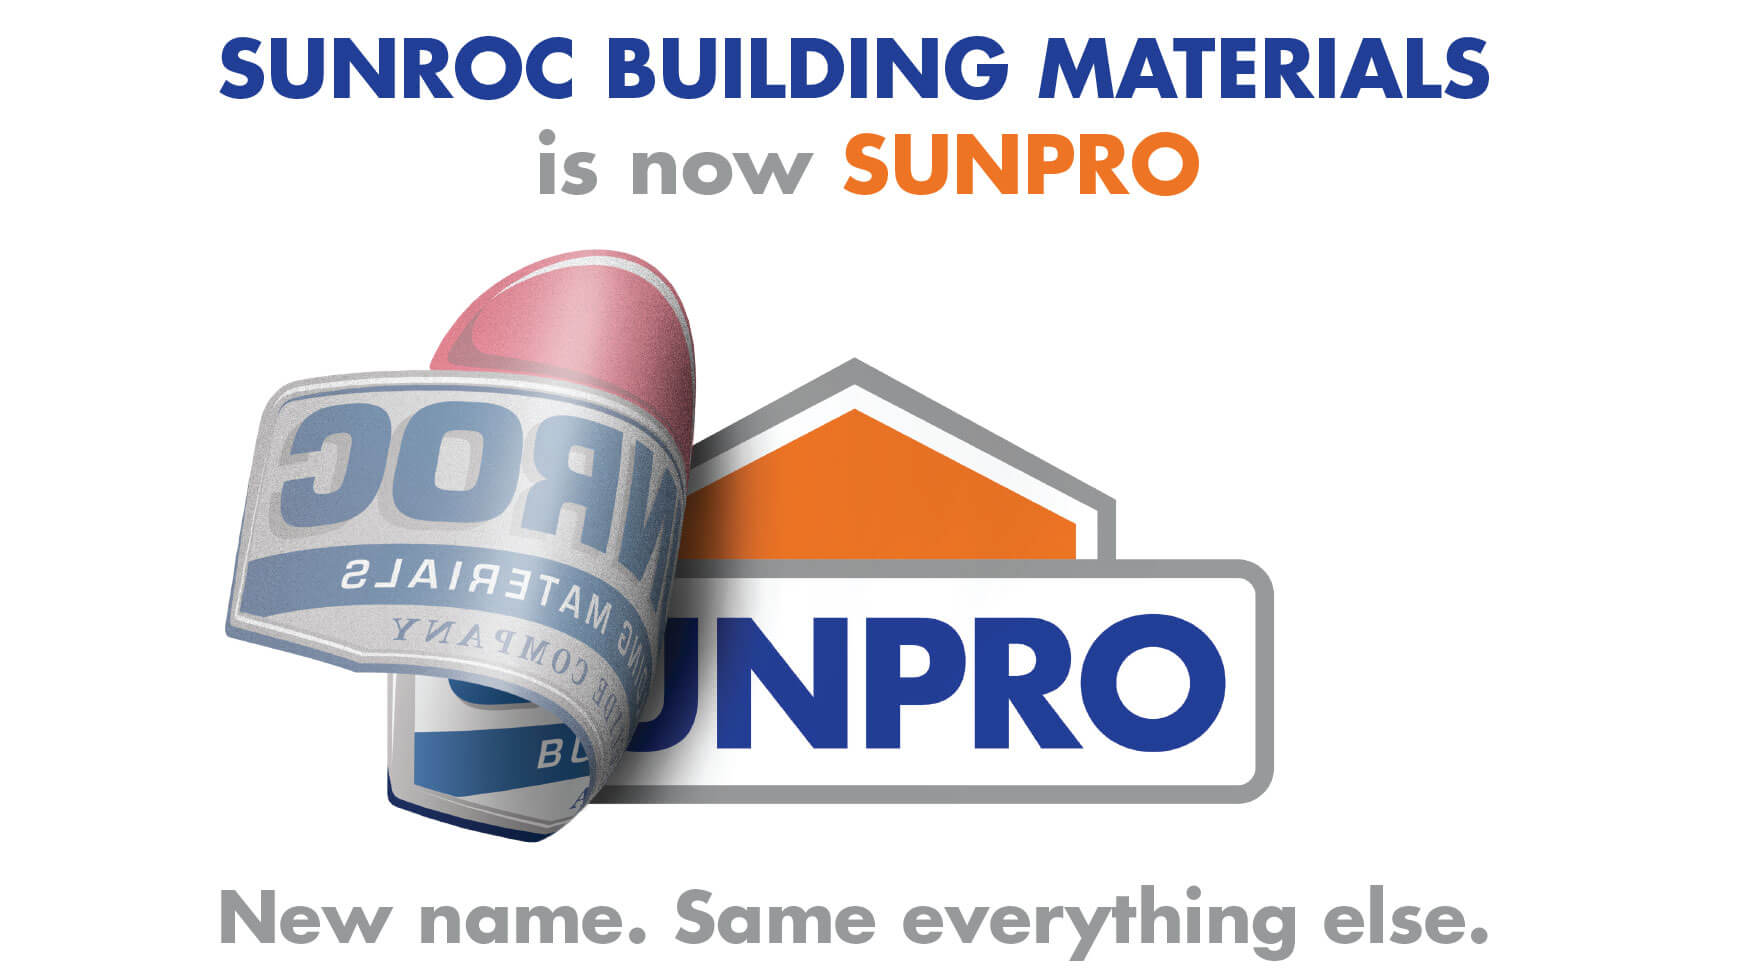 Sunroc Building Materials is now Sunpro